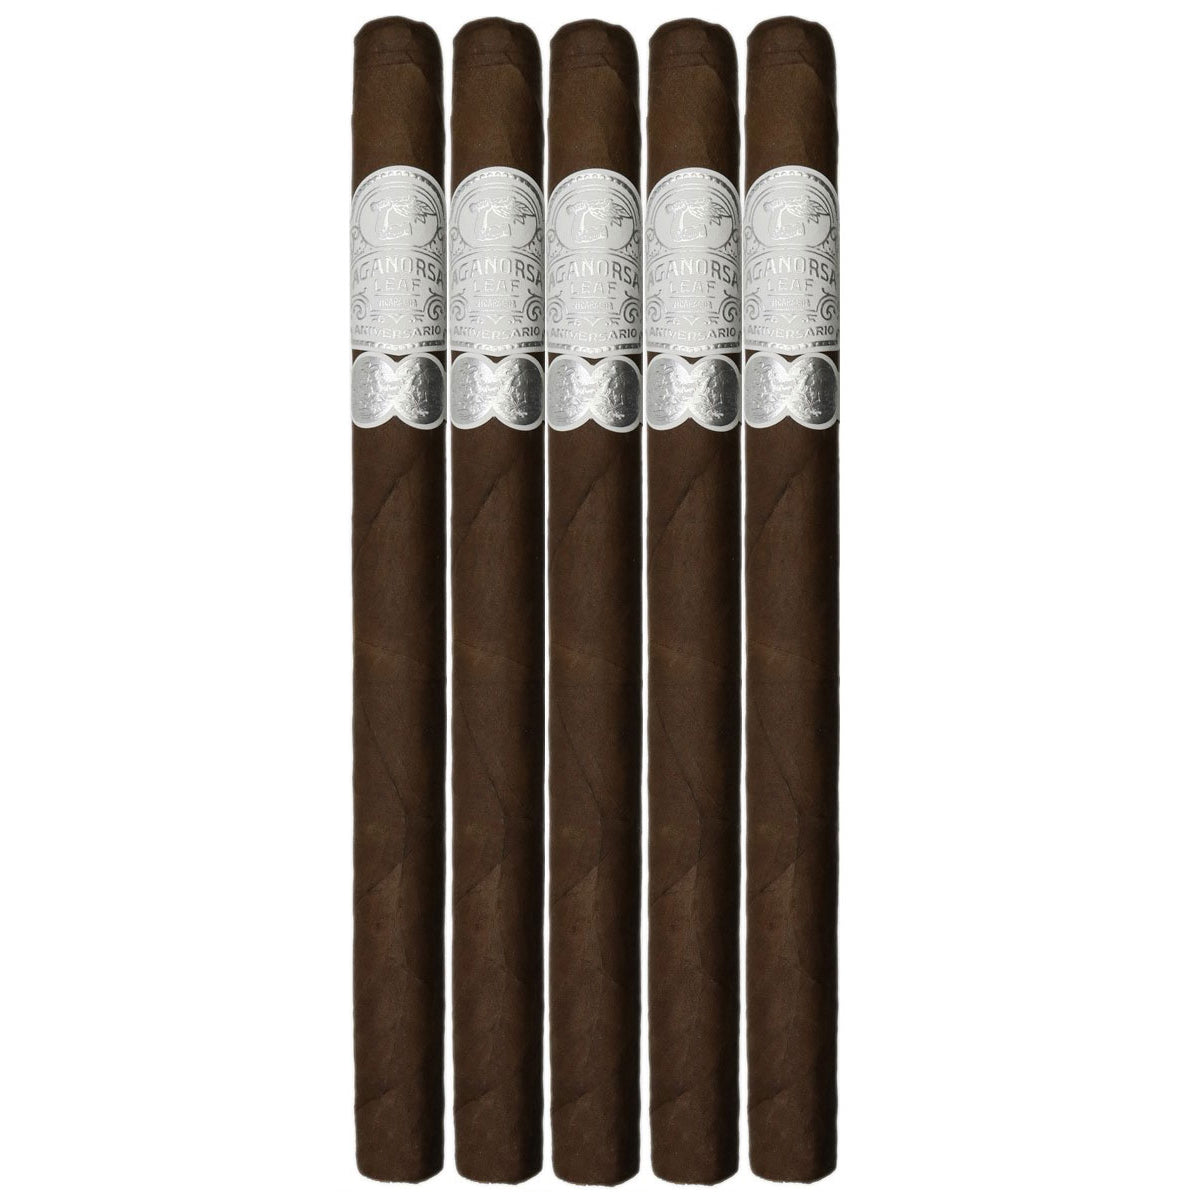 Aganorsa Leaf Aniversario Corojo Lancero 7 1/2 X 40 Cigars 5 Pack